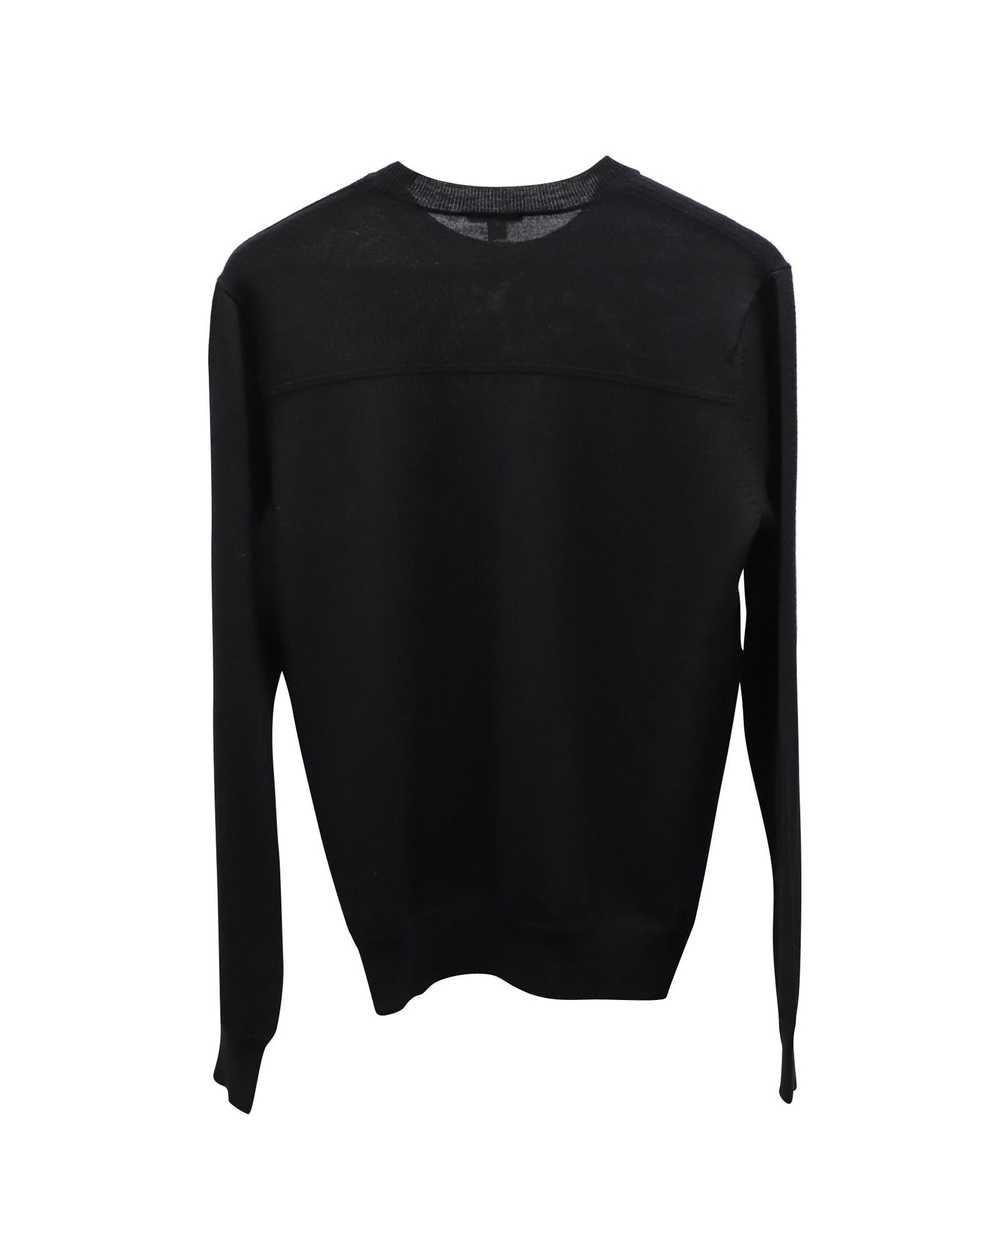 Theory Classic Black Wool Crewneck Sweater - image 2